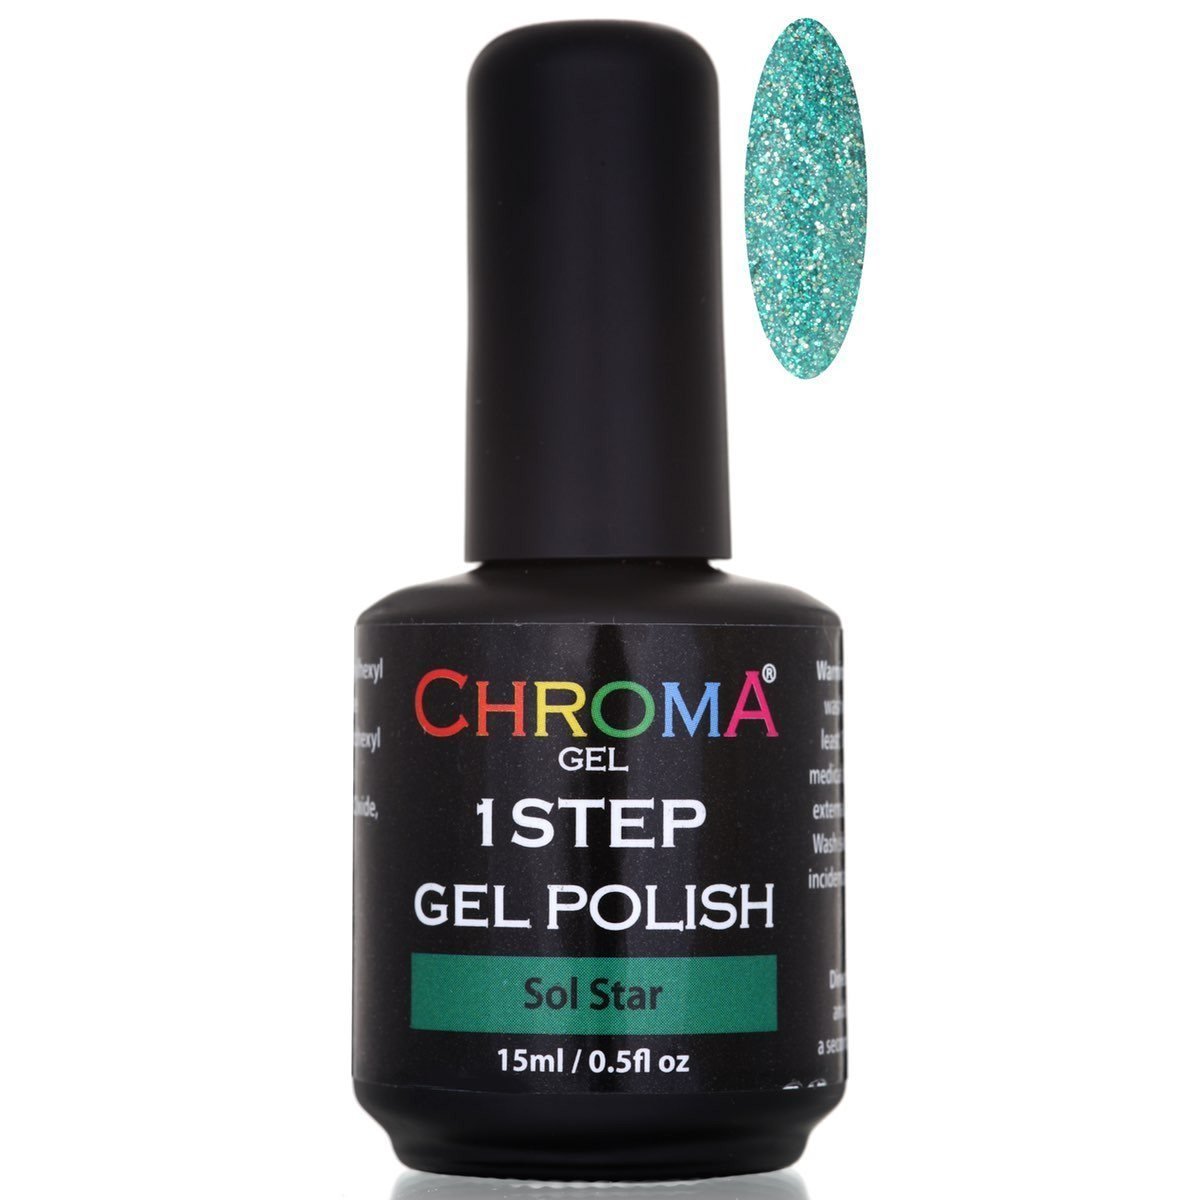 Chroma Gel 1 Step Gel Polish Sol Star No.43 - Glittery Green Shade for Long-Lasting, Chip-Resistant Nails - beautyhair.co.ukChroma Gel